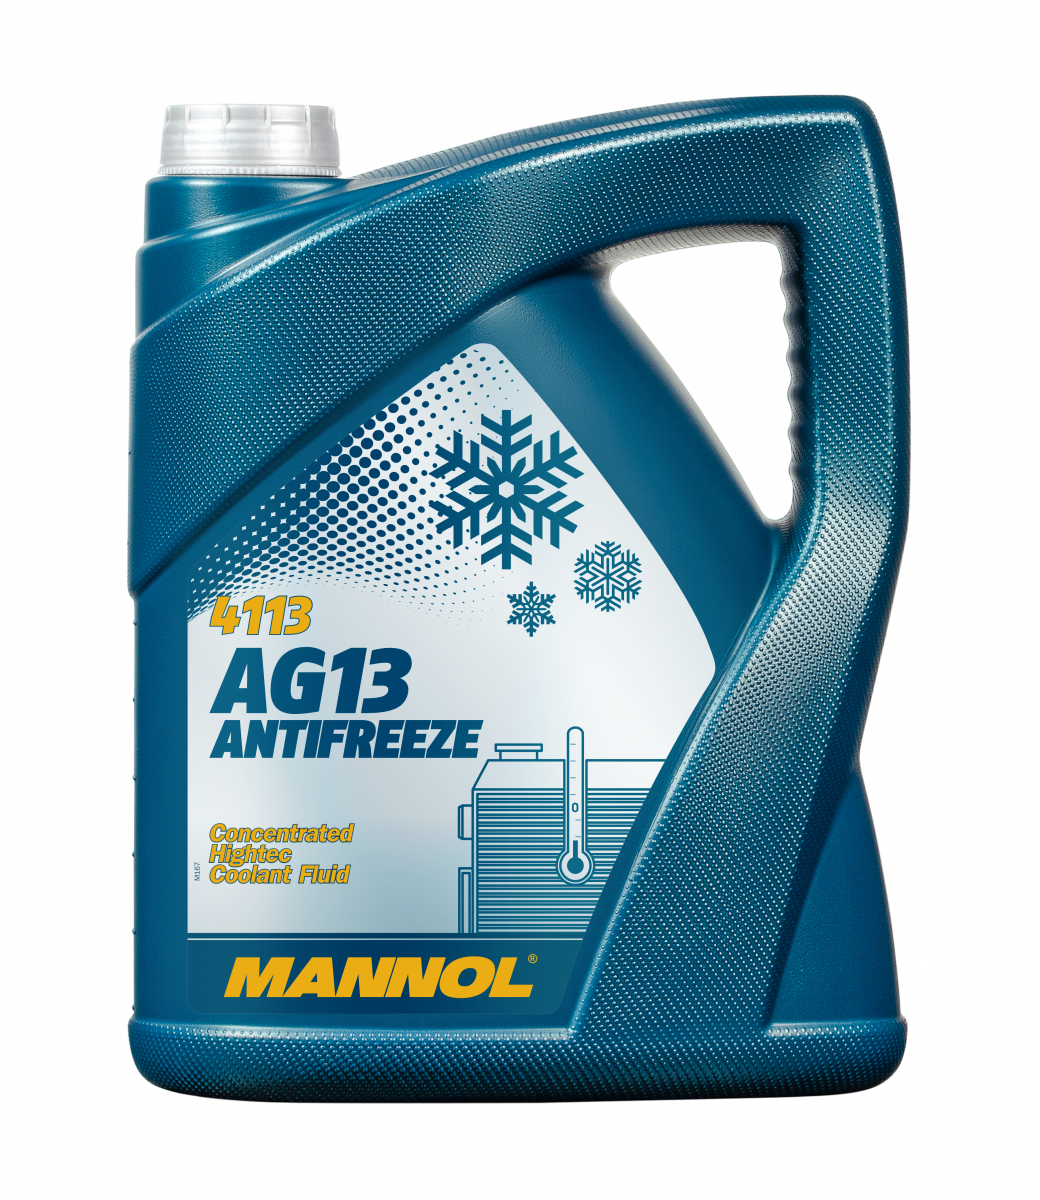 Mannol 4013 Antifreeze Ag13 (-40) Hightec